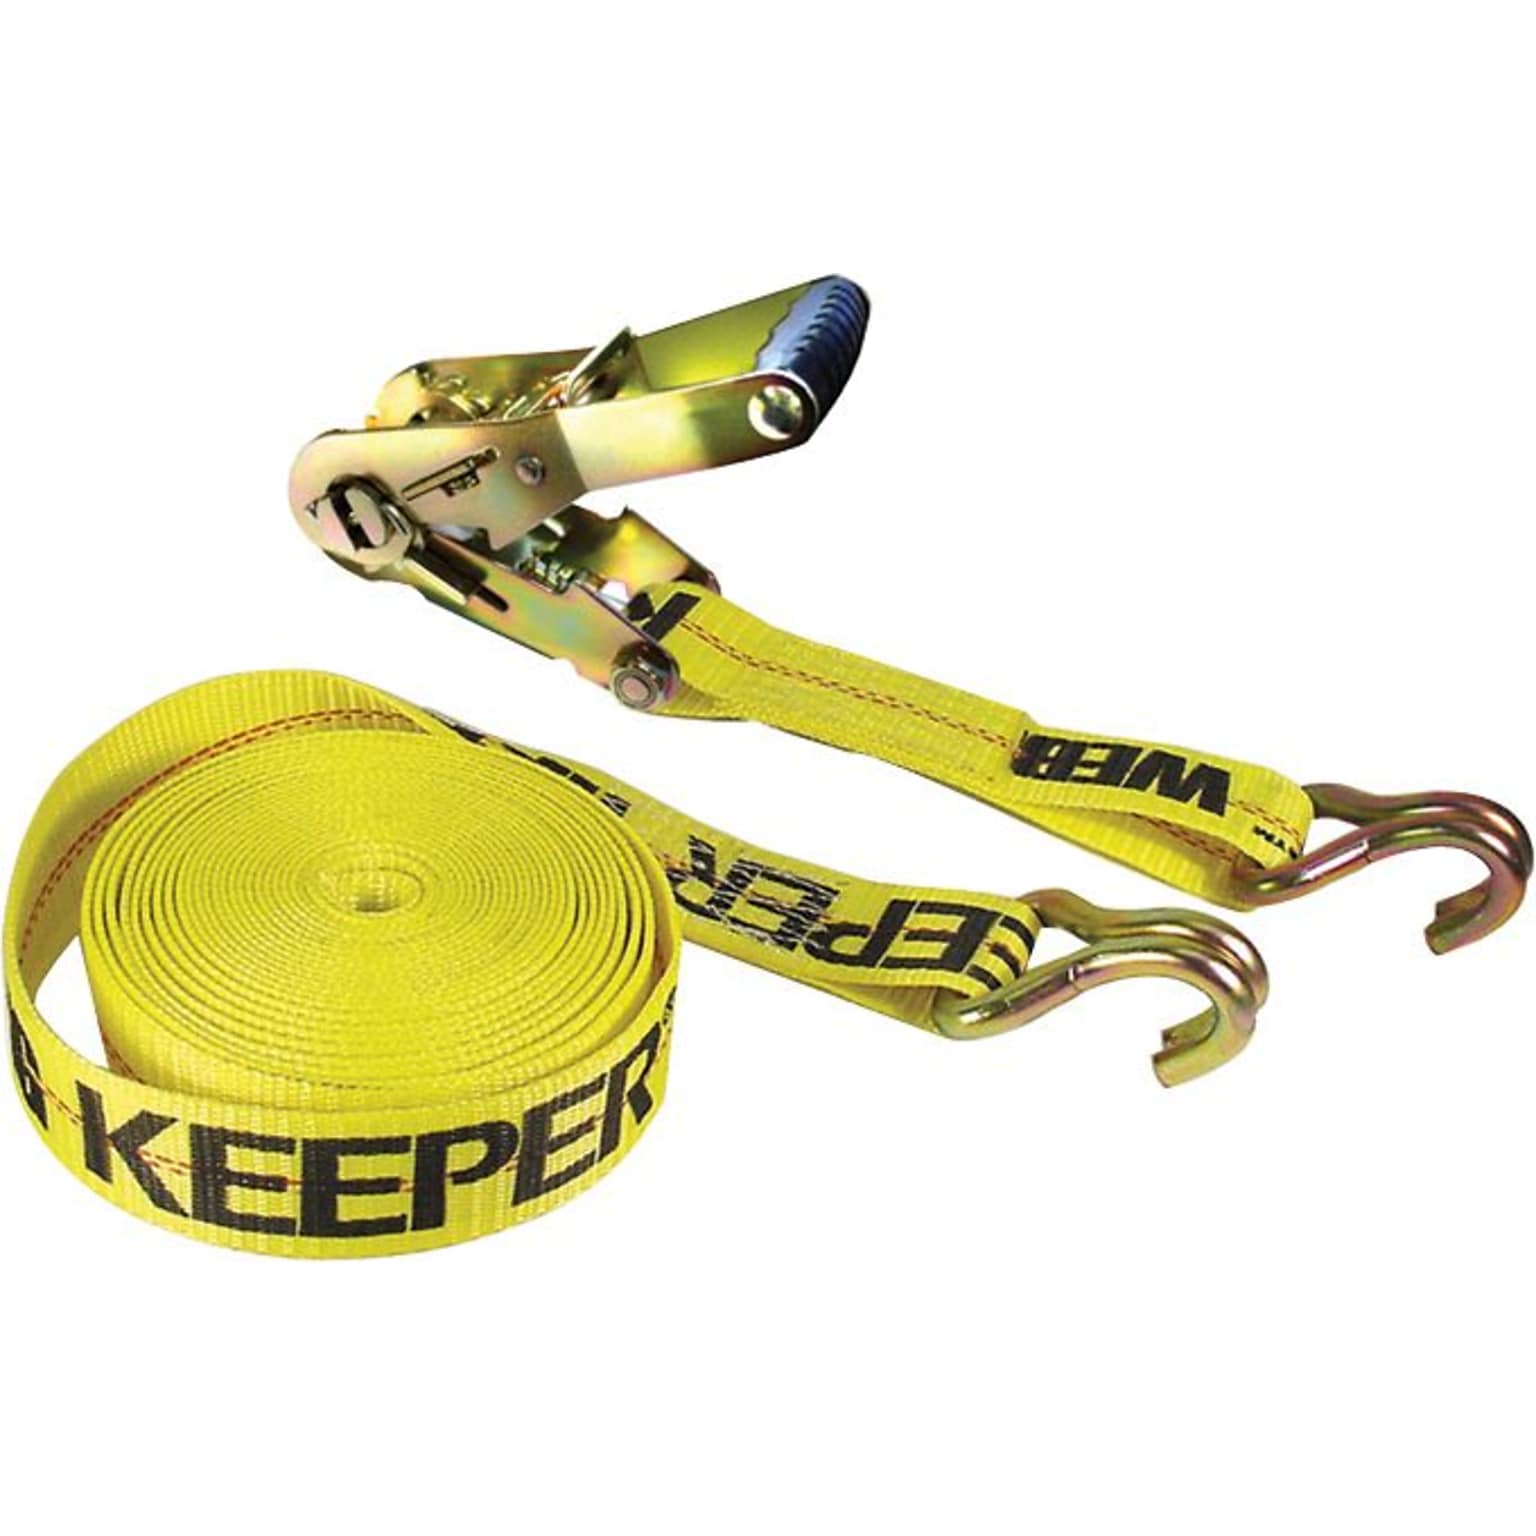 Keeper 324 Ratchet Tie Down Straps (130-04622)